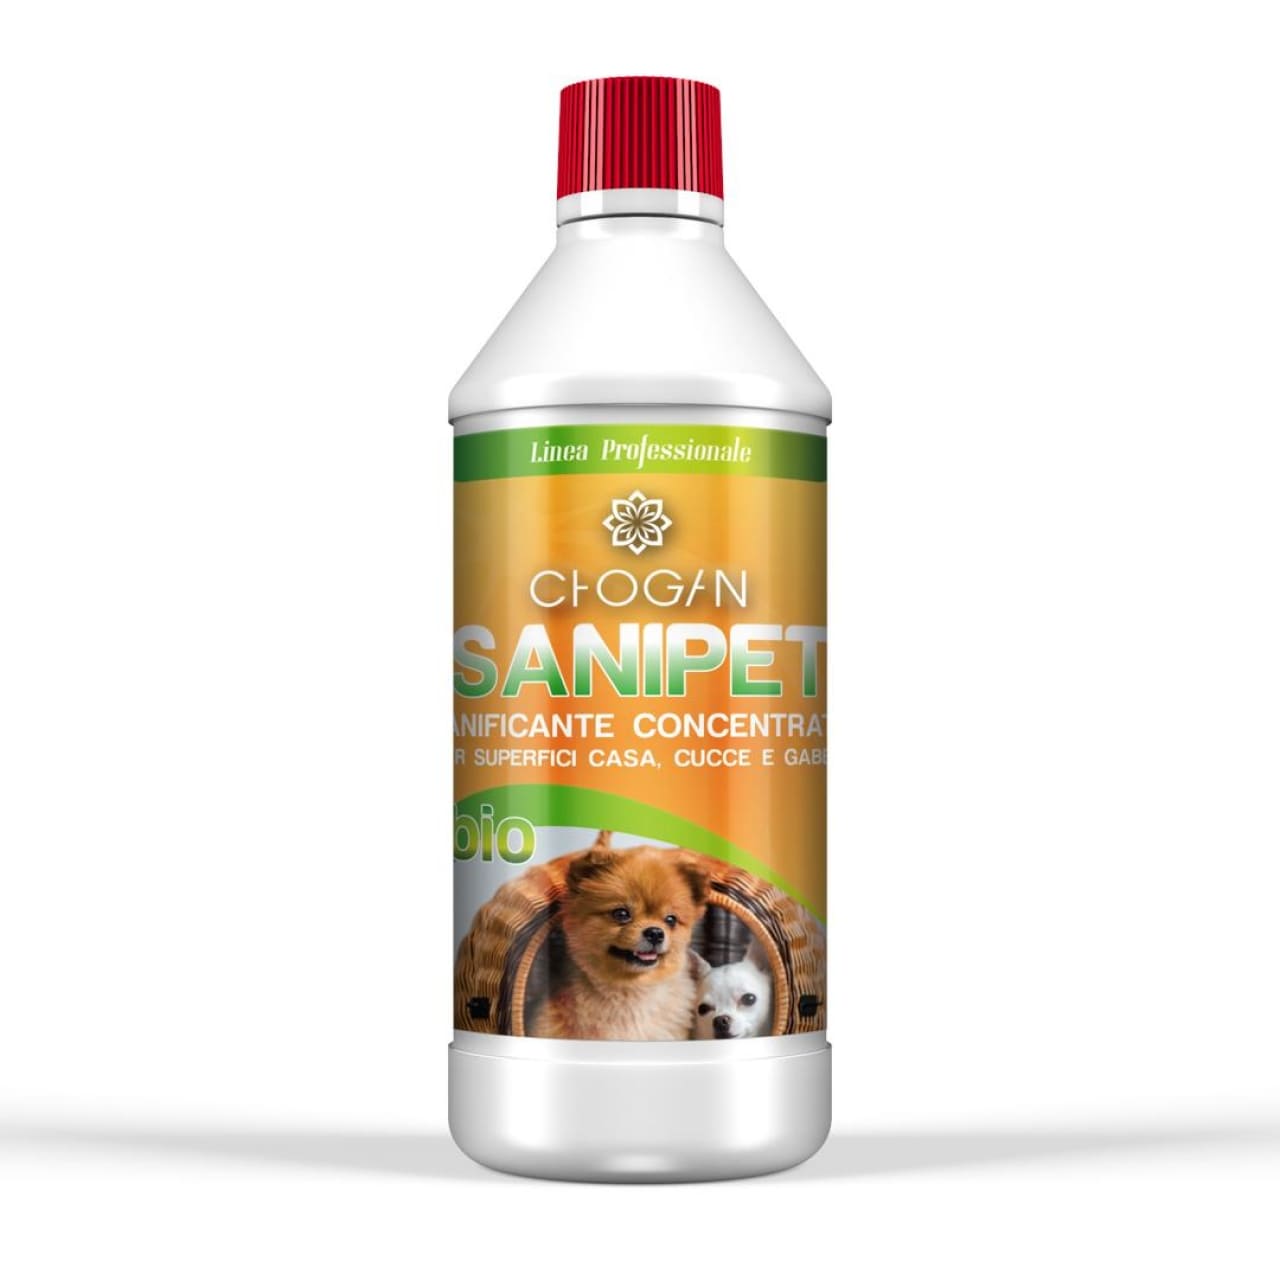 Sanipet – hygiene cleaner